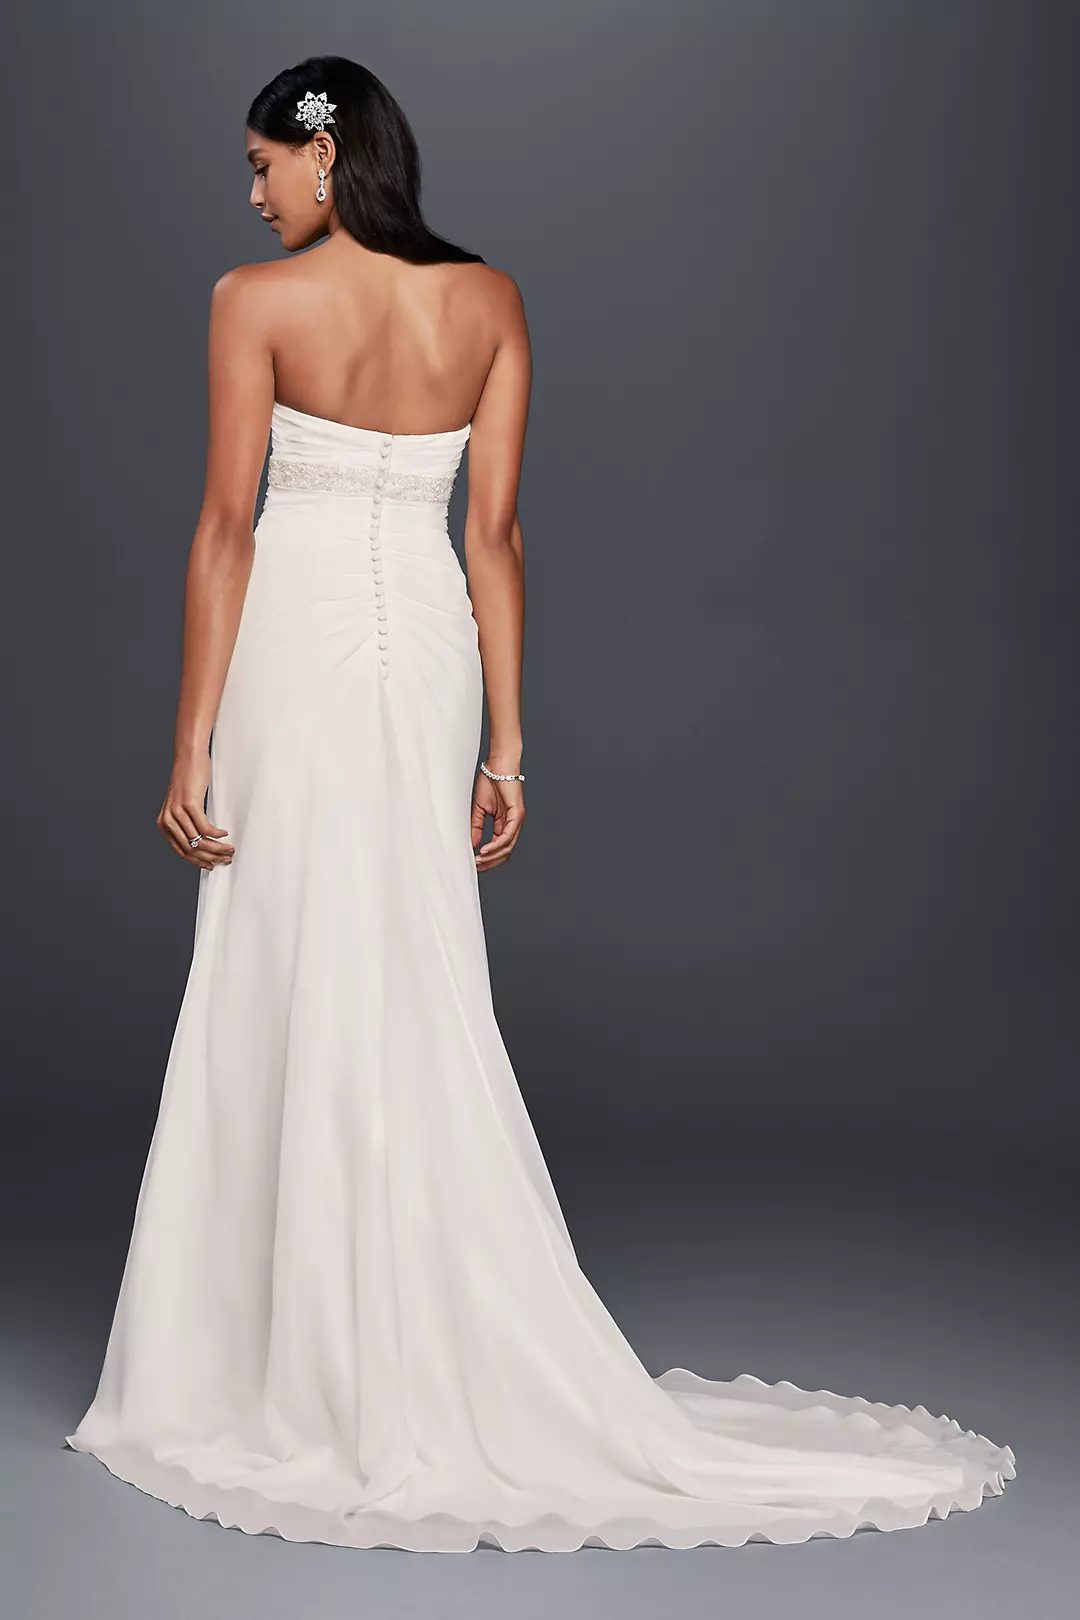 A-Line Wedding Dress with Beaded Empire Waist Image 2